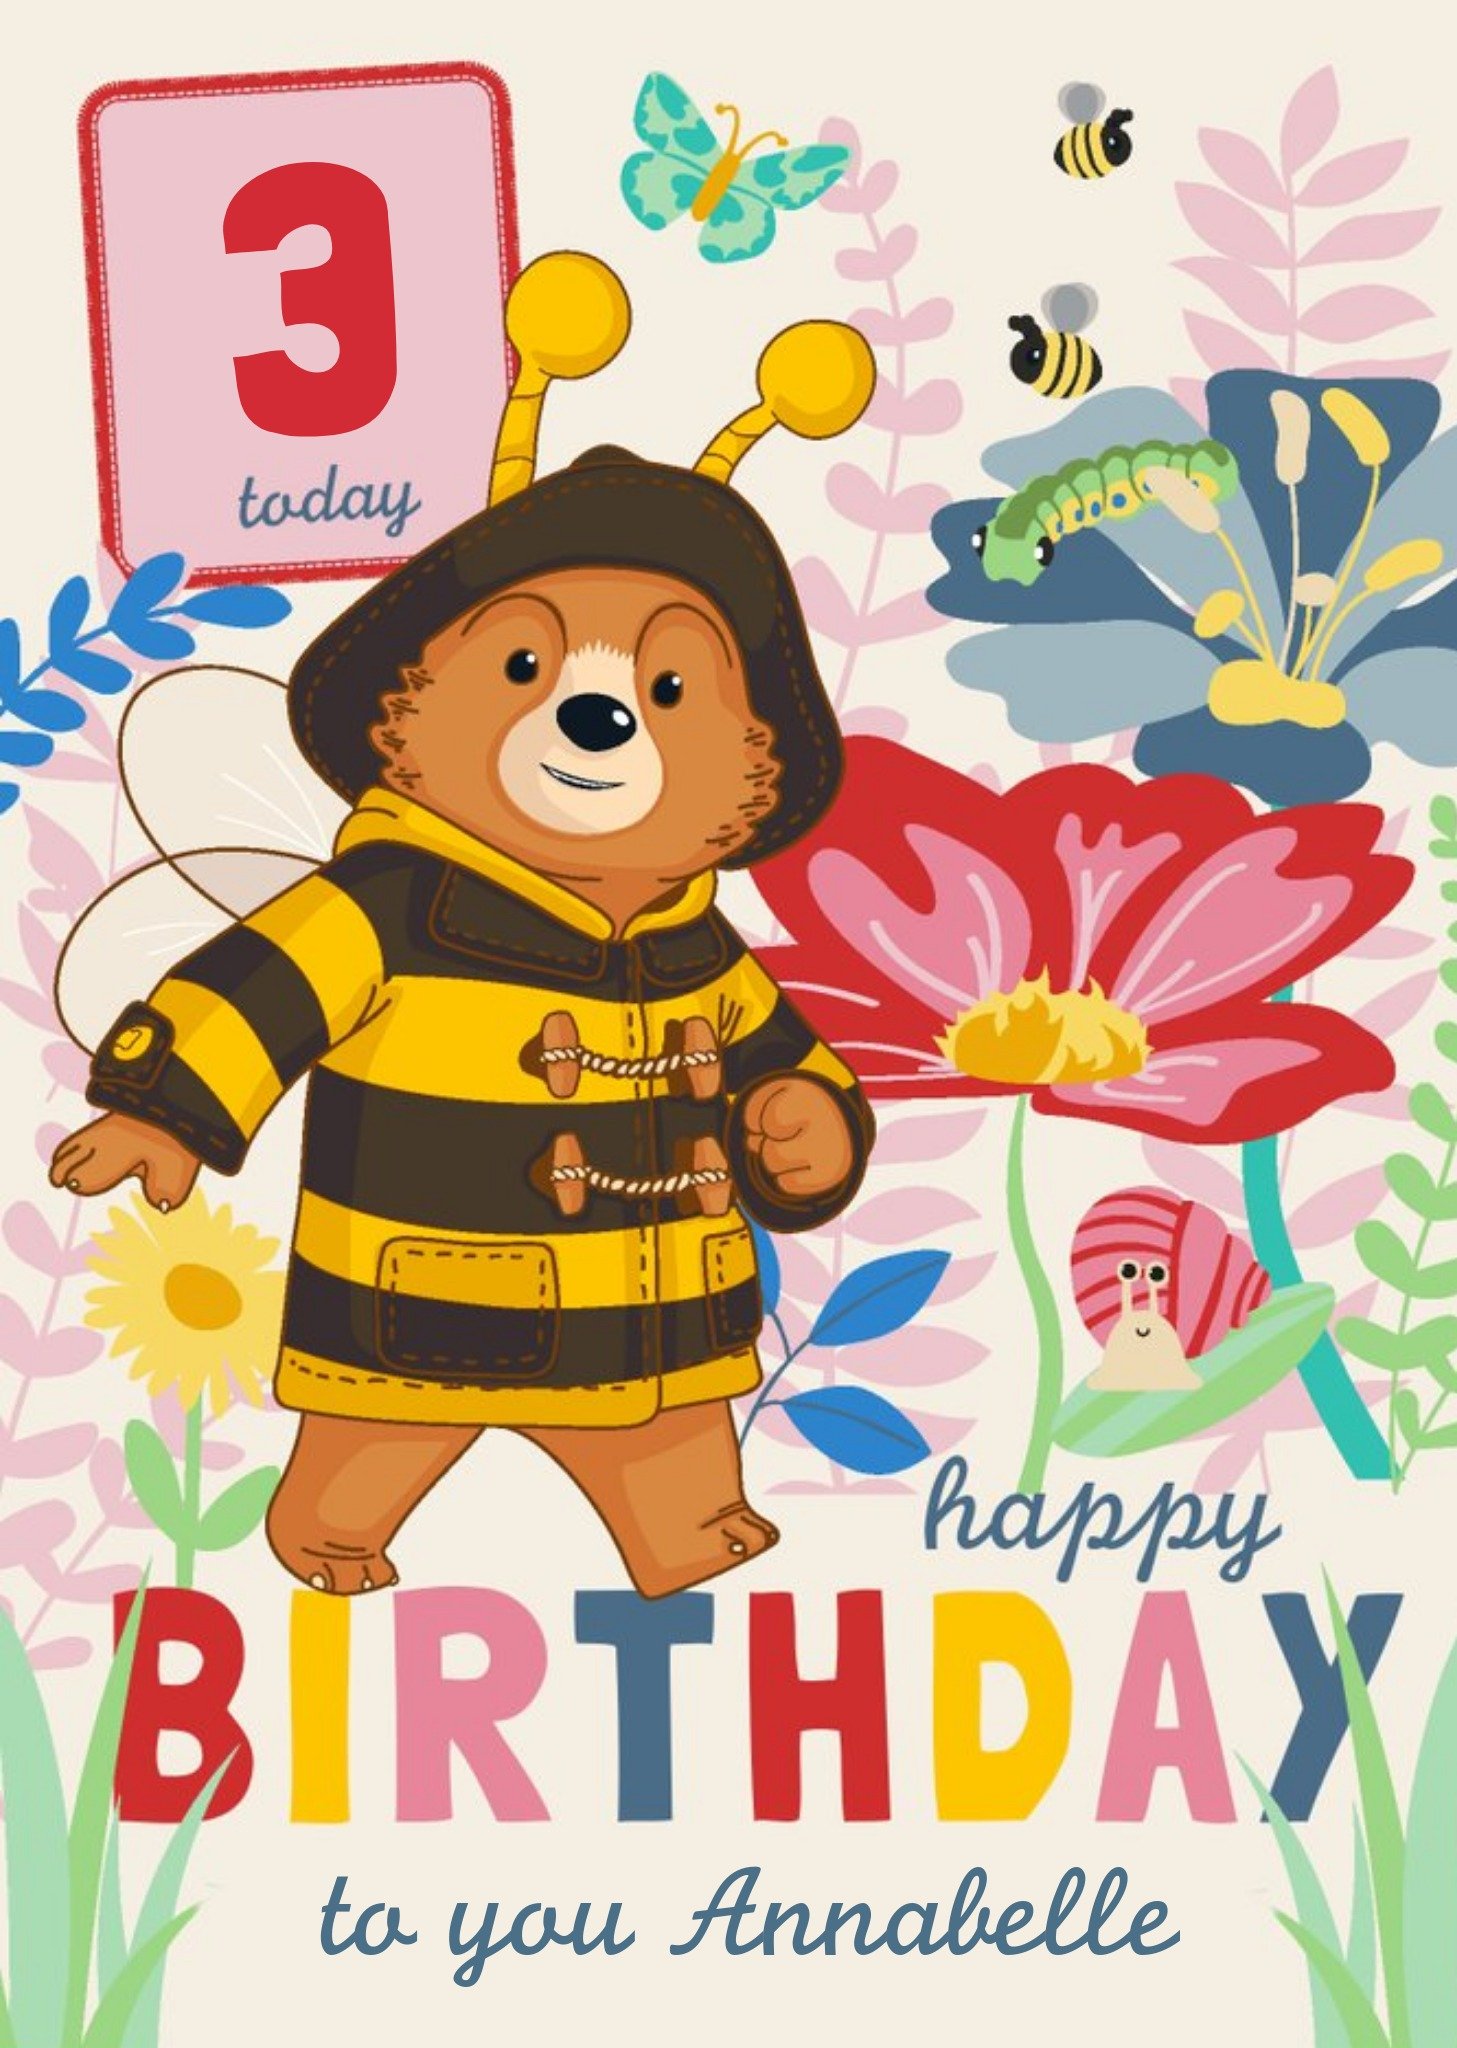 Paddington Bear Bumblebee Paddington Personalised Age 3 Today Birthday Card, Large